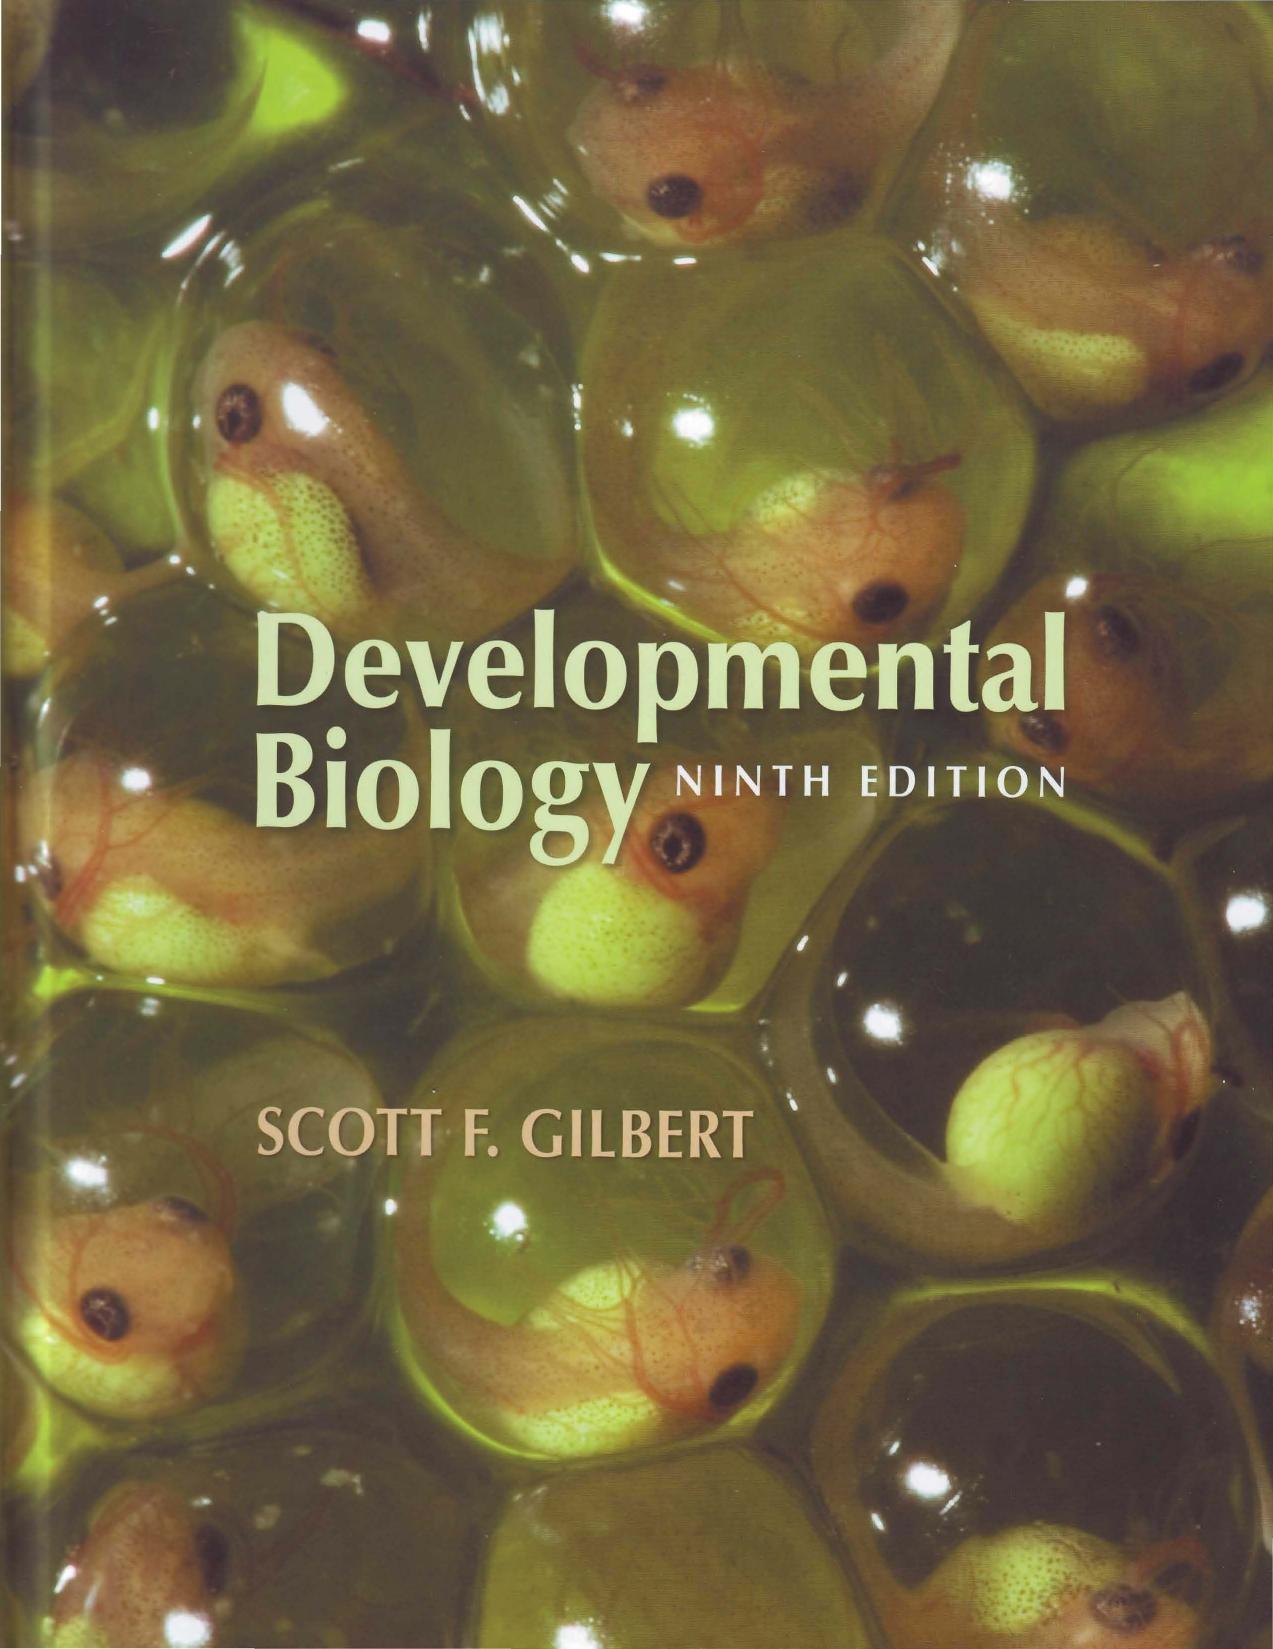 Developmental Biology (9th Edition) 2010